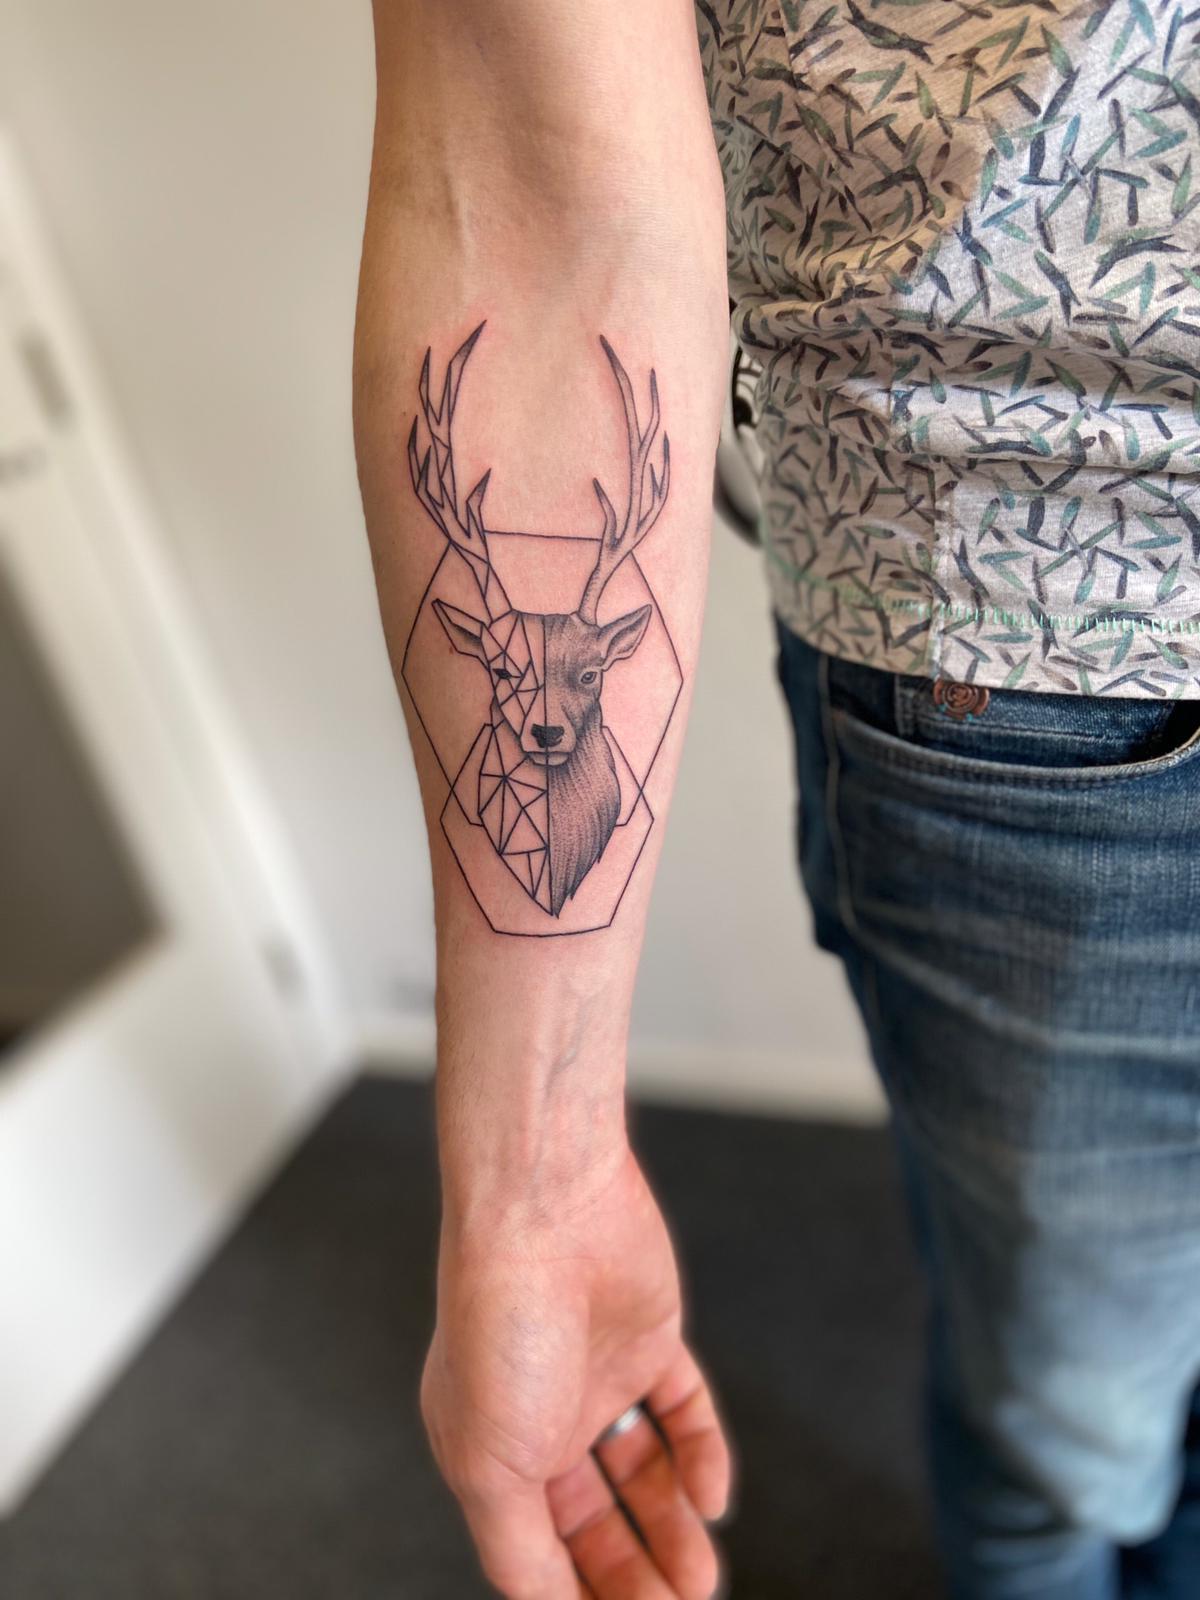 Deer tattoo leg sleeve | Leg tattoos, Deer tattoo, Tattoos